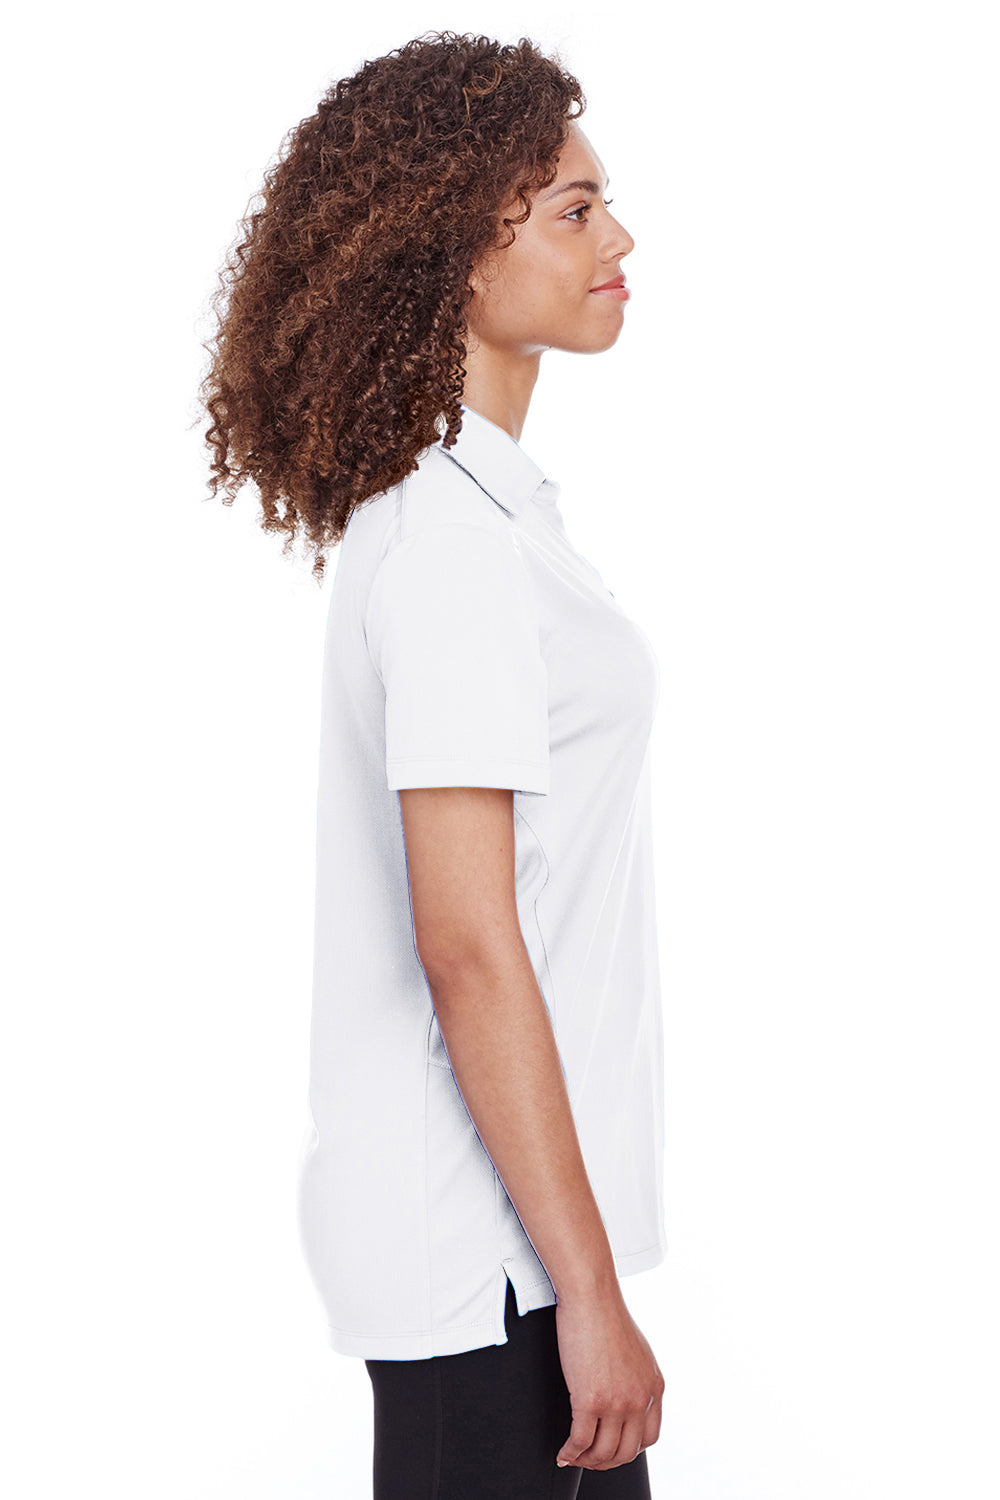 Spyder S16519 Womens Freestyle Short Sleeve Polo Shirt White Side